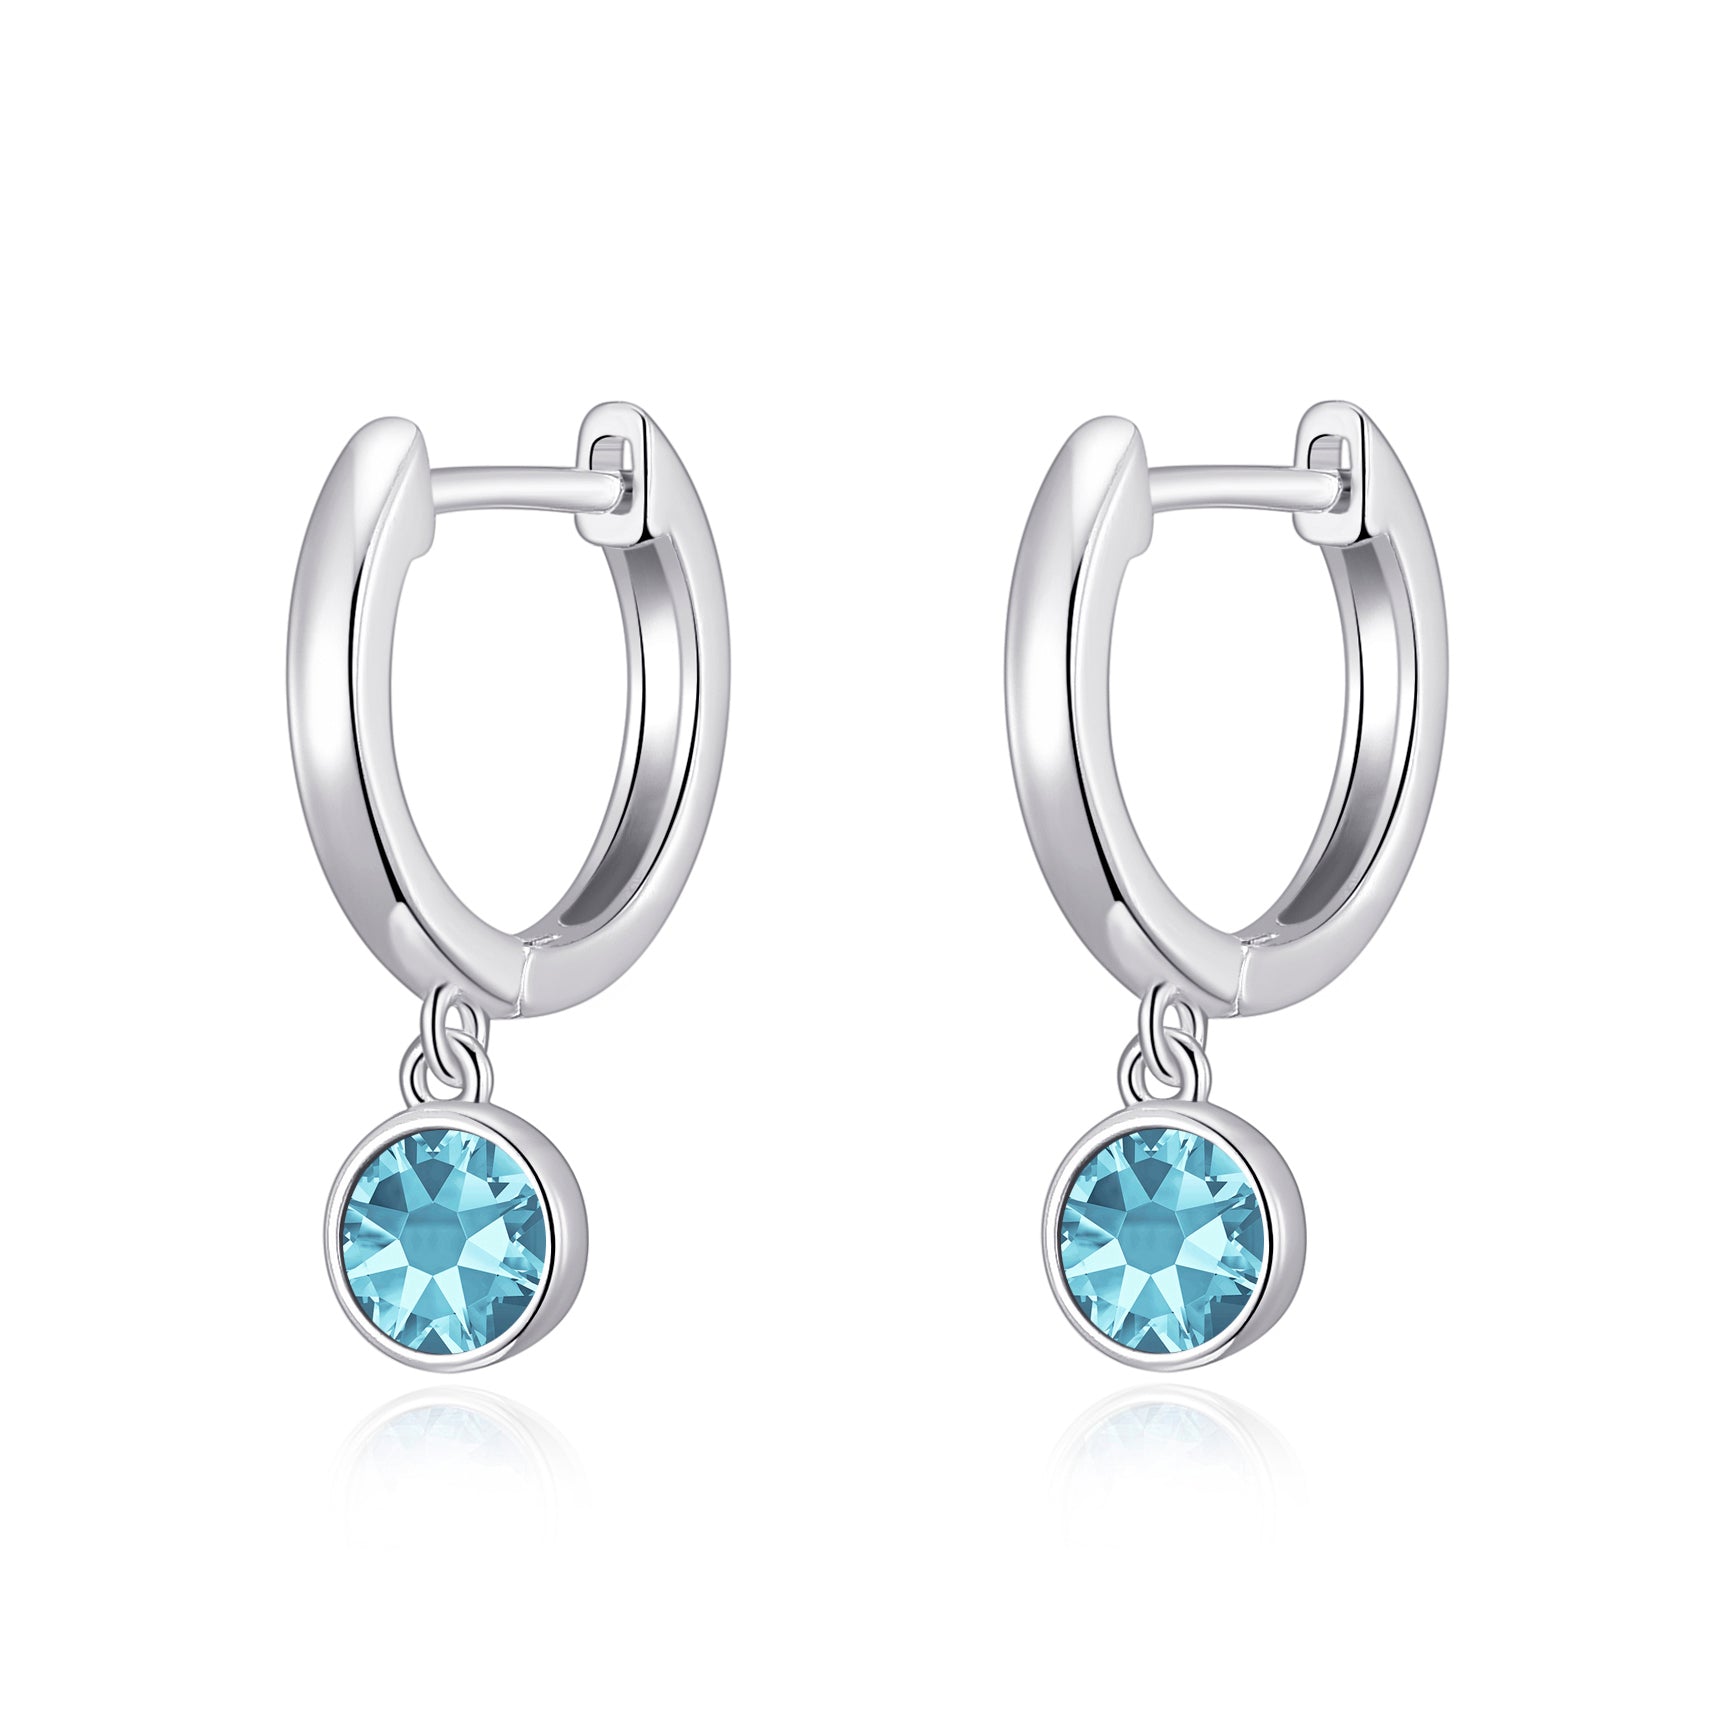 Light Blue Crystal Hoop Earrings Created with Zircondia® Crystals by Philip Jones Jewellery